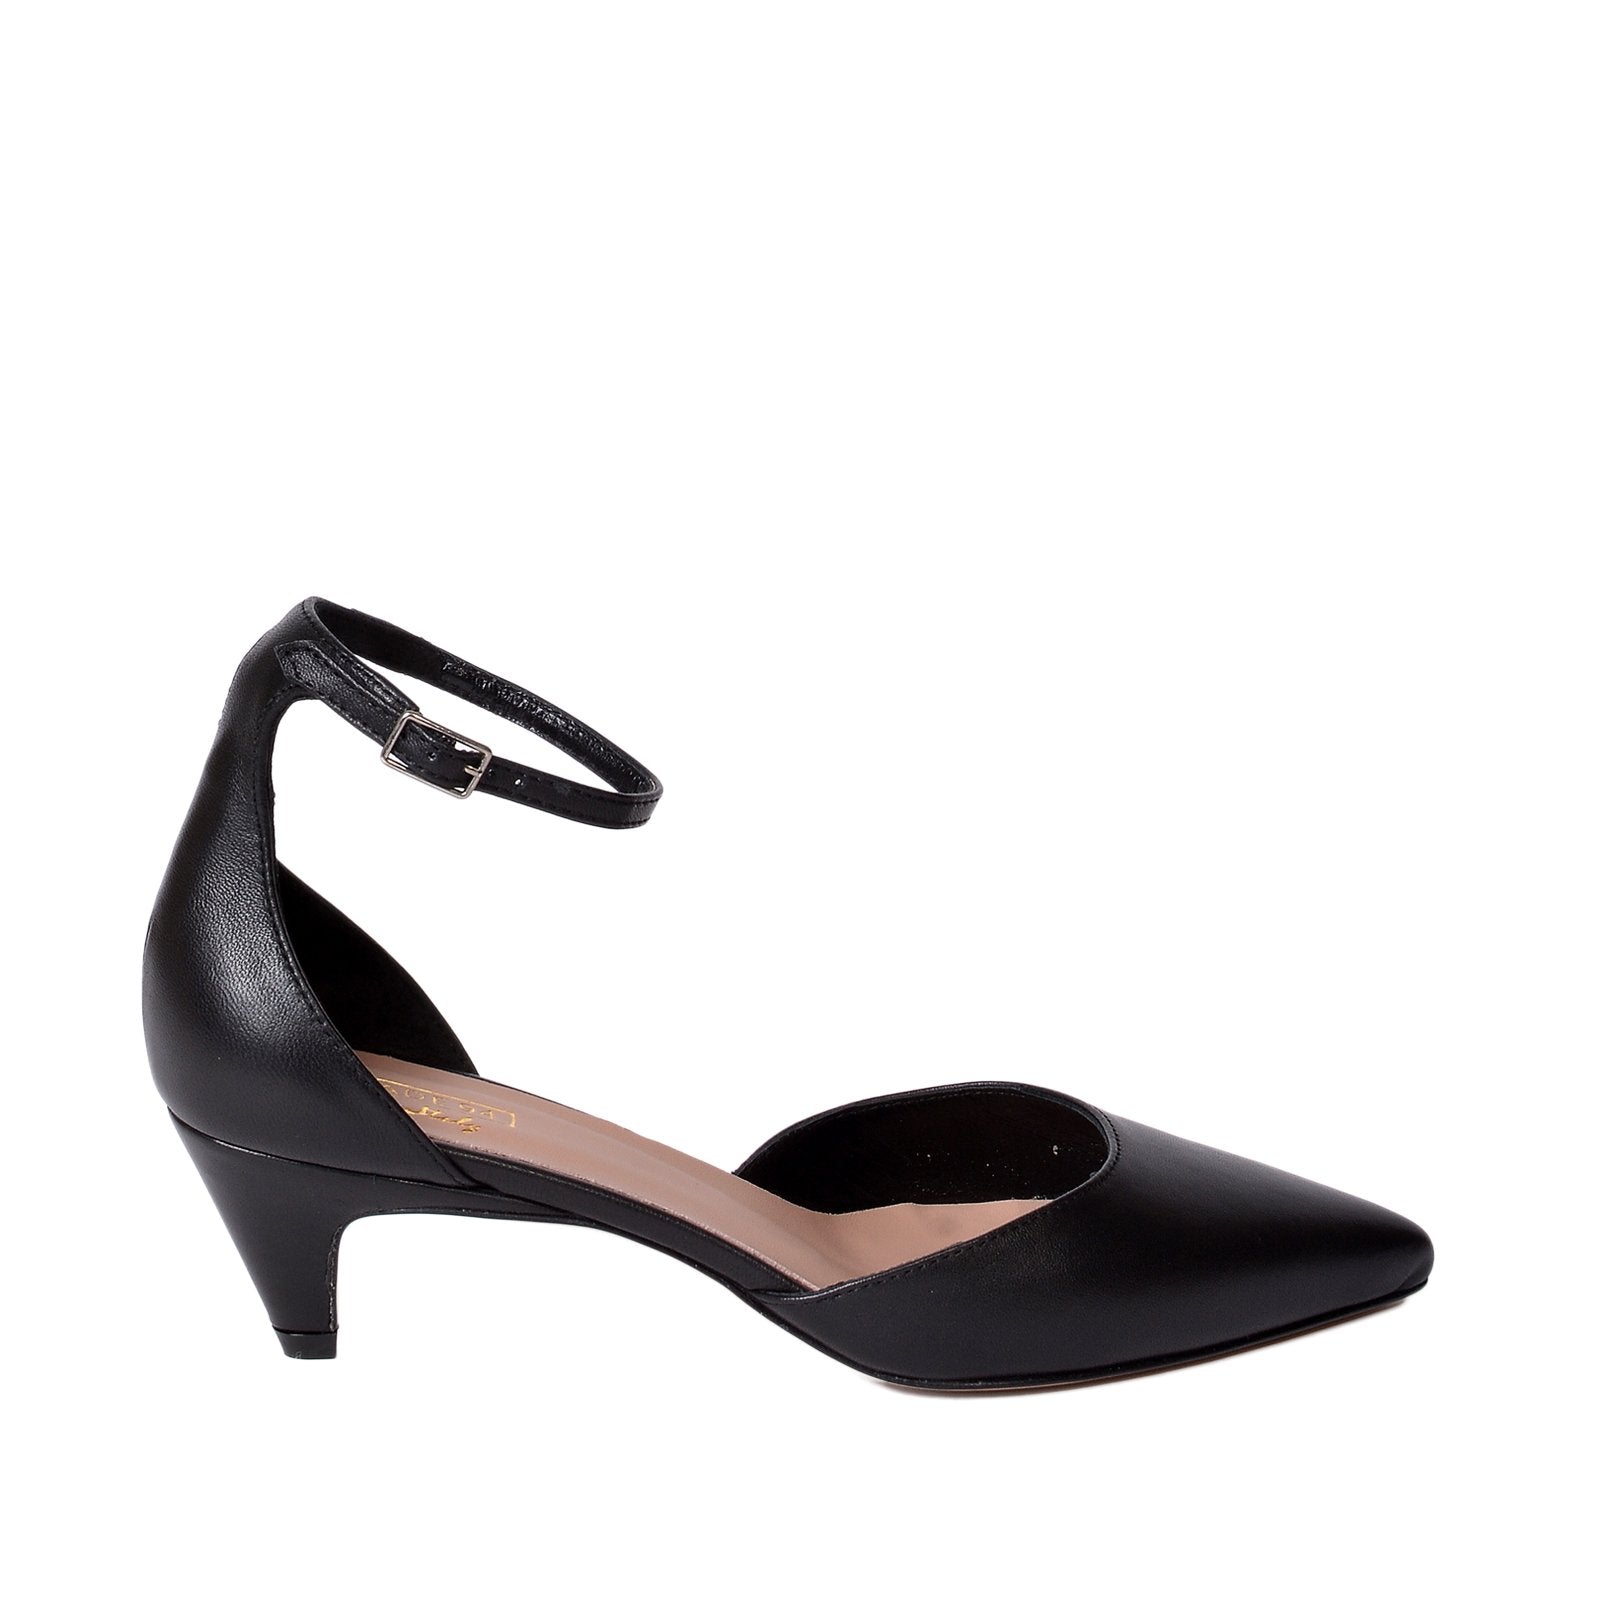 Viki Black Nappa Leather Shoes Heels 790-007-1 - 1